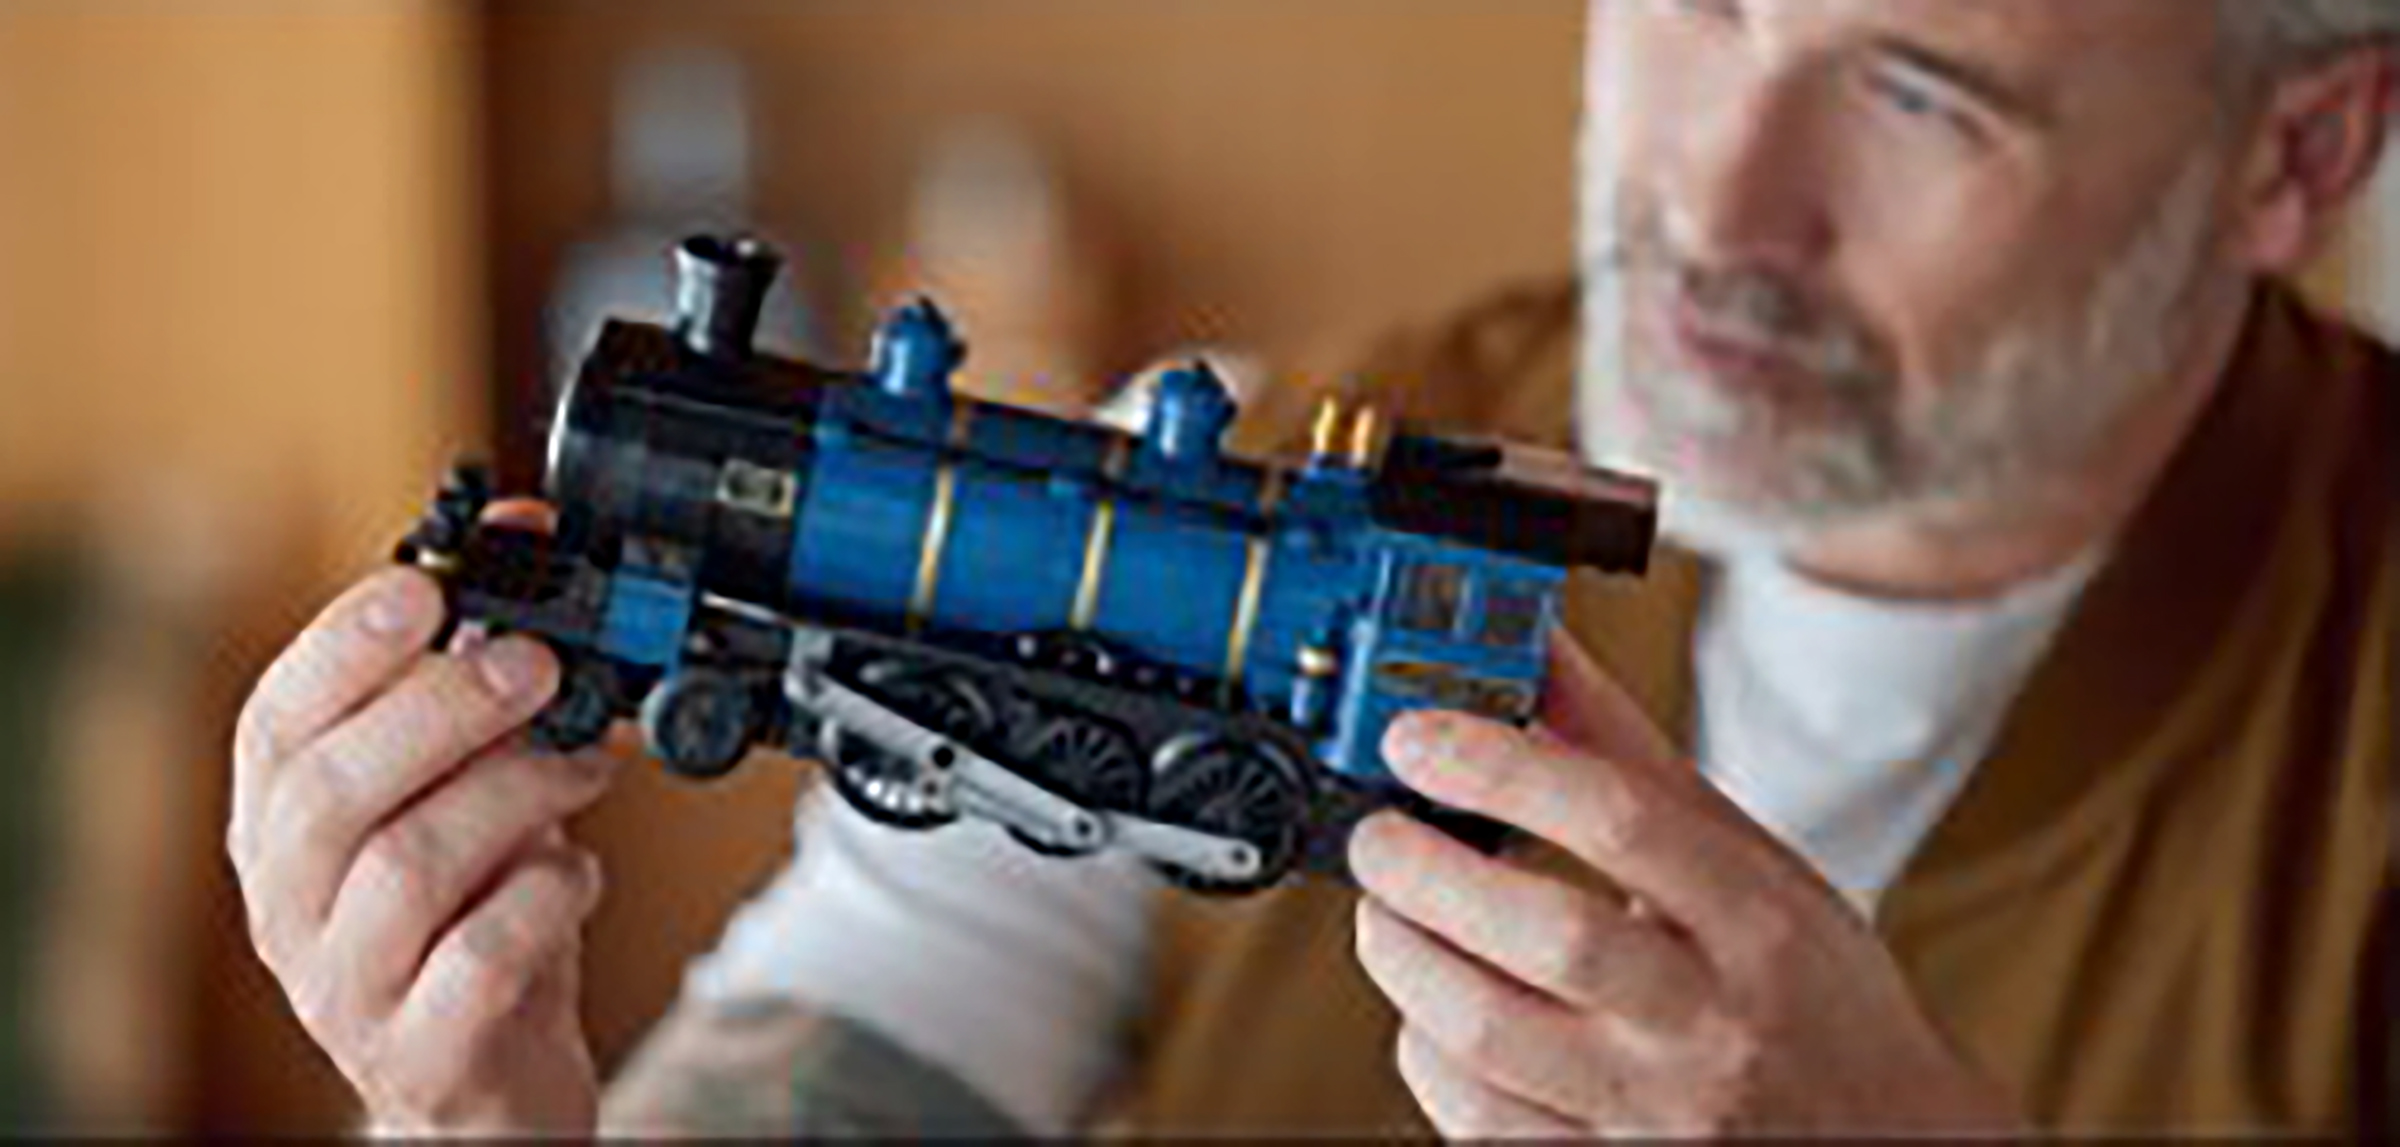 LEGO Ideas Oriental Express Train Announced - Brick Land